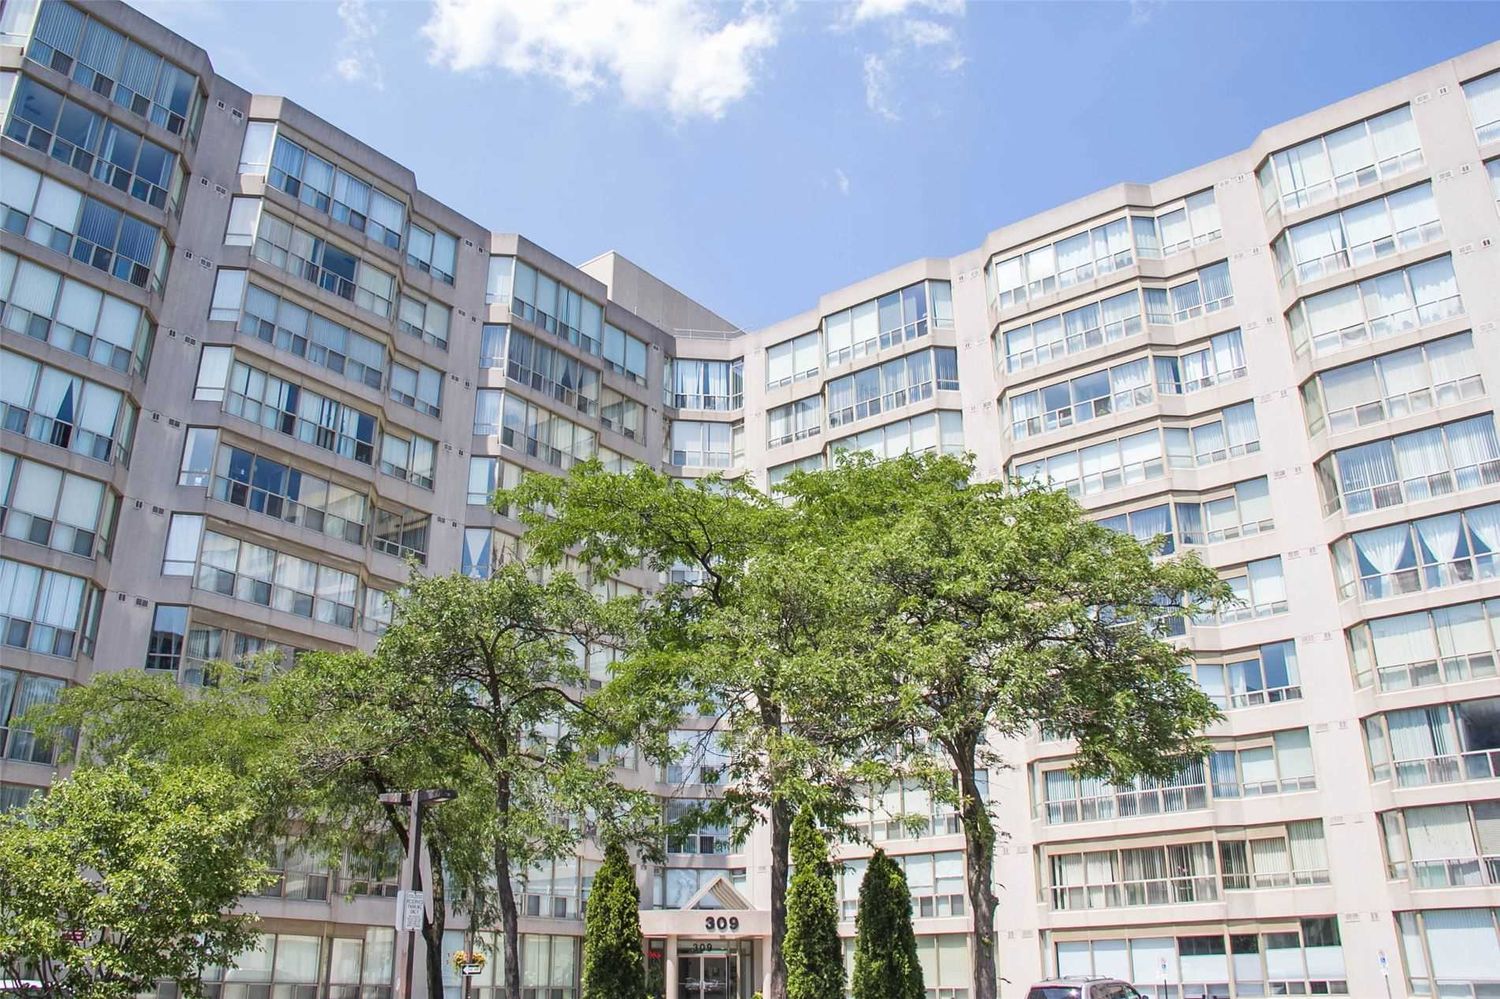 309 Major Mackenzie Drive E. Cedar Gate Condos is located in  Richmond Hill, Toronto - image #2 of 3